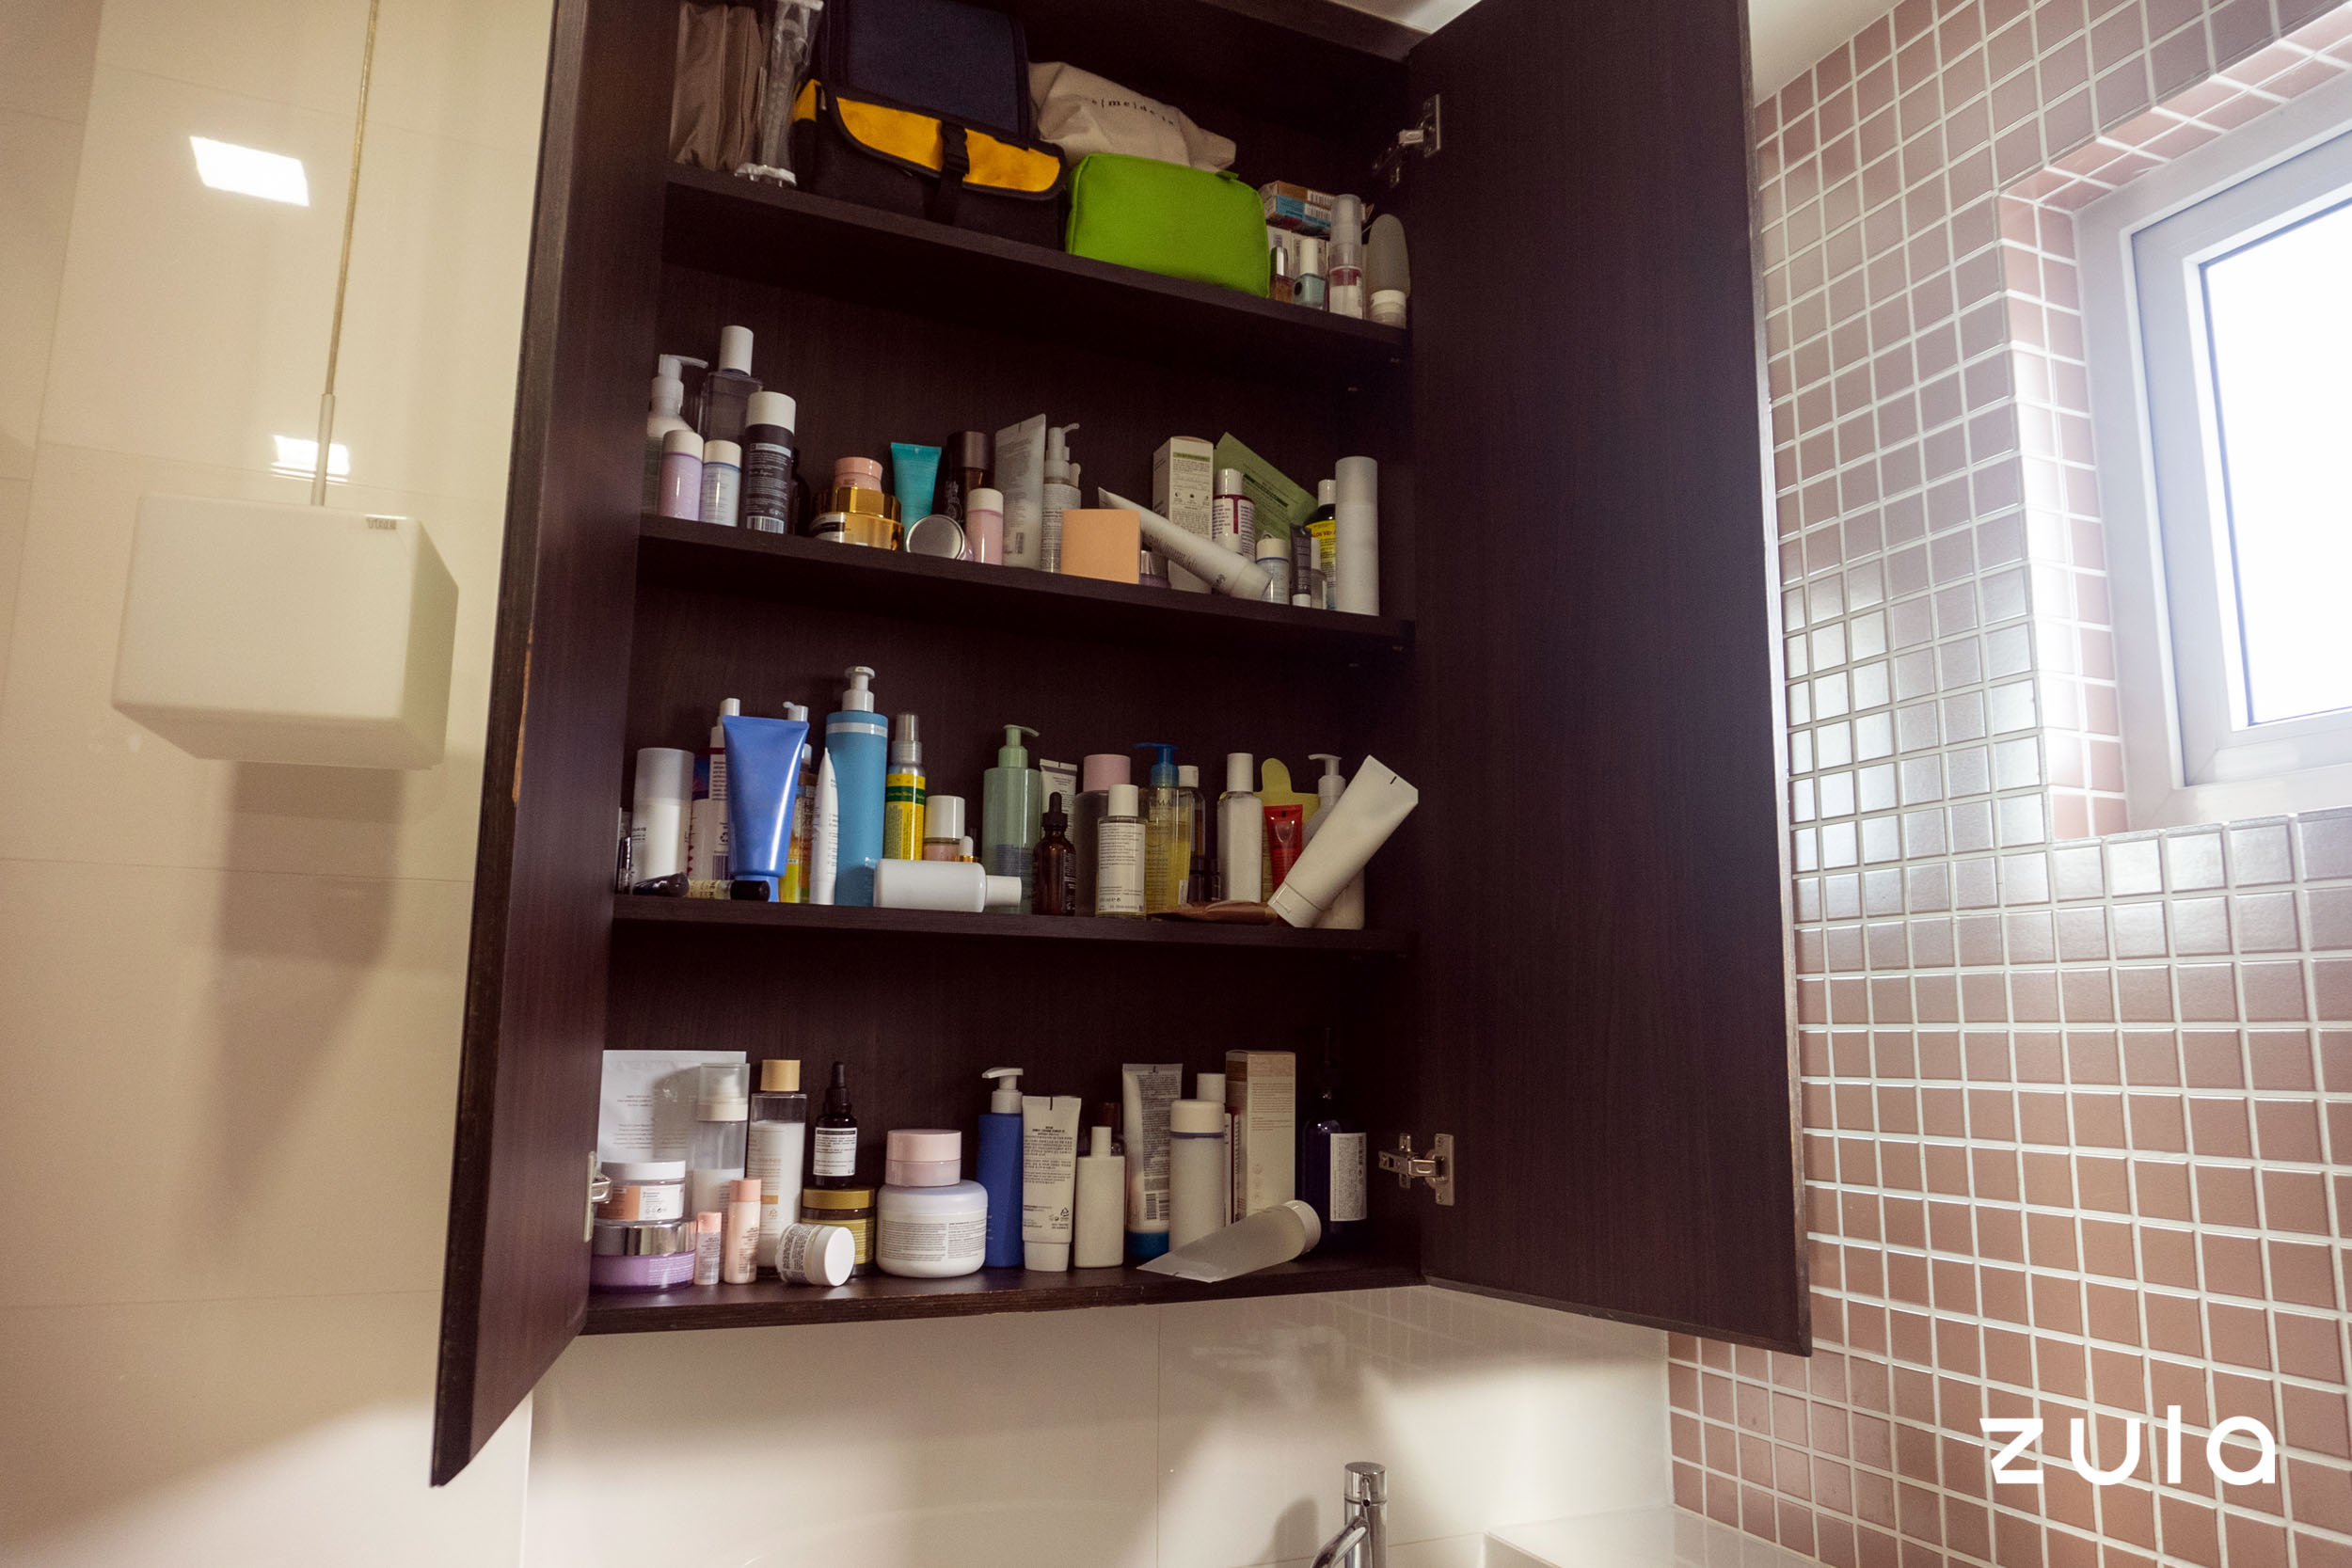 minimalist skincare routine shelves